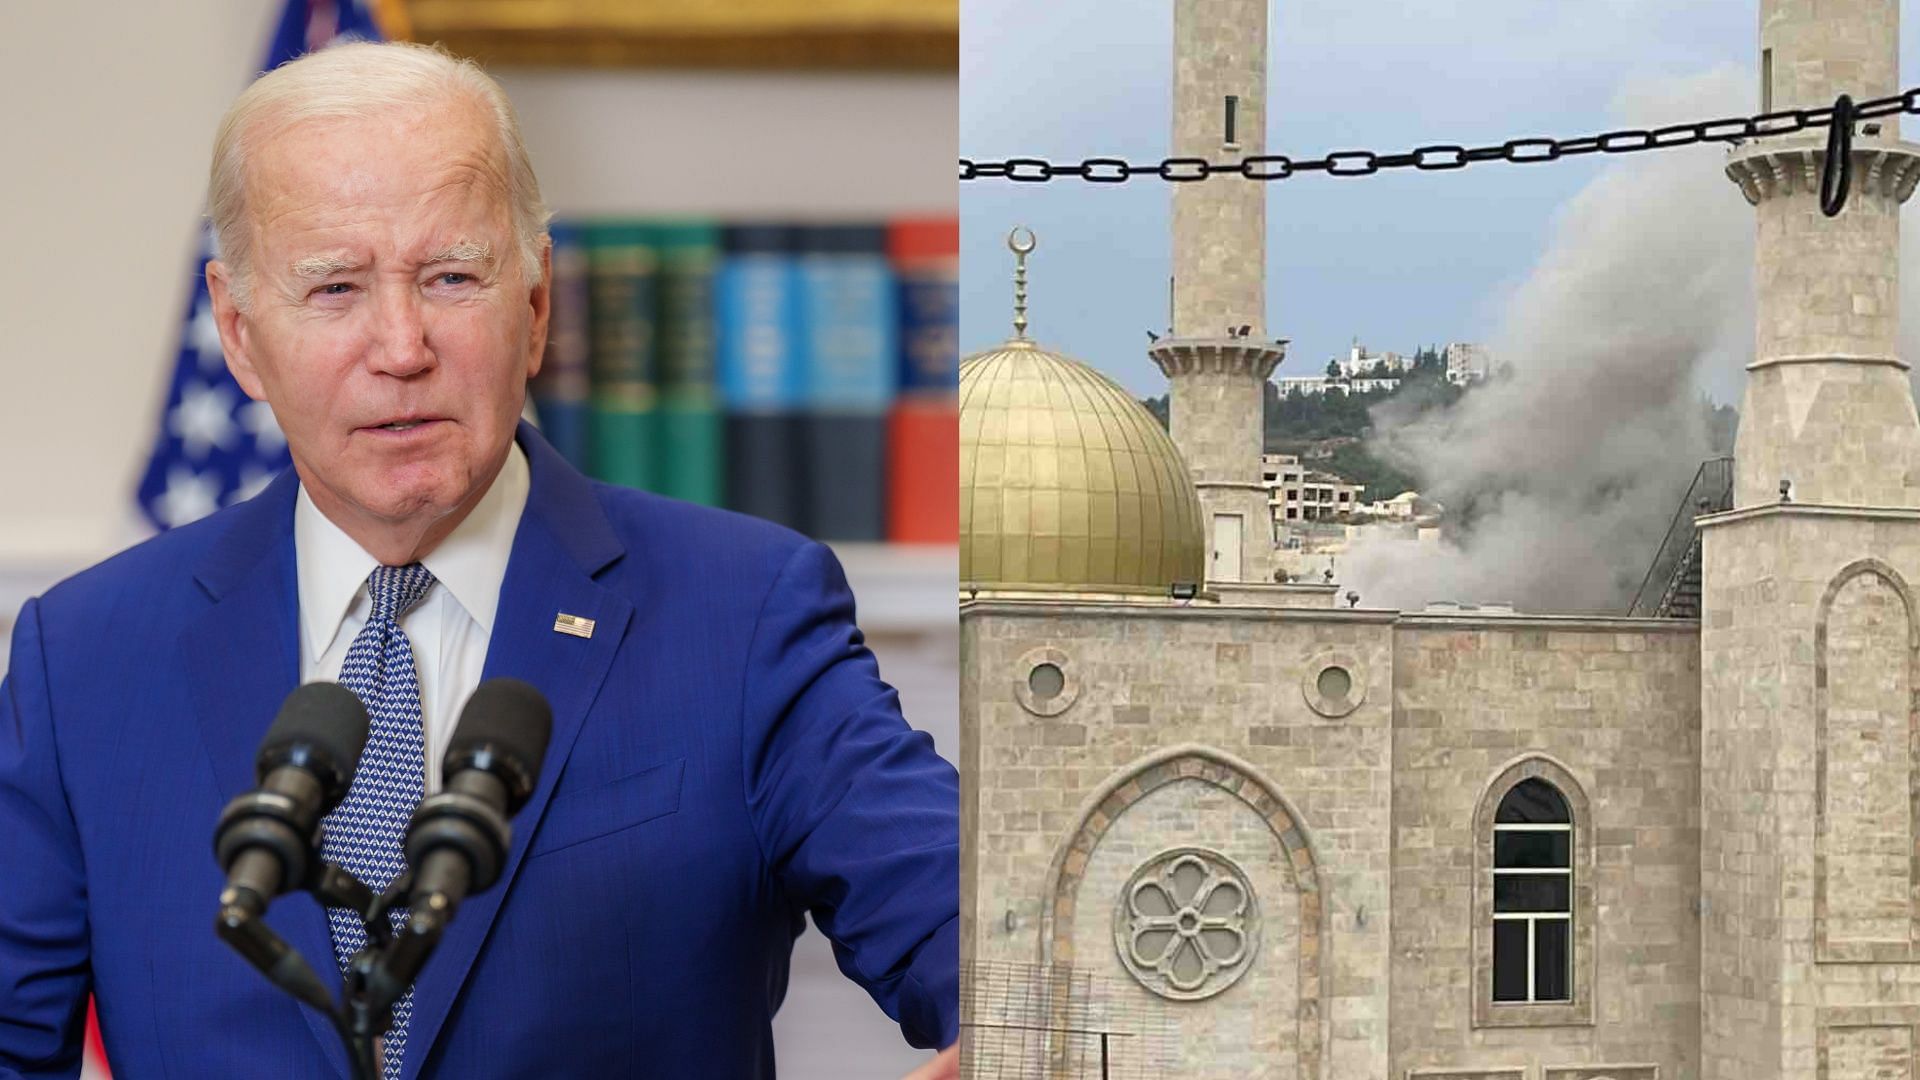 President Biden receives backlash online for attending BBQ party amid Israel-Hamas conflict. (Image via X/@POTUS, @Oz1Daniel)